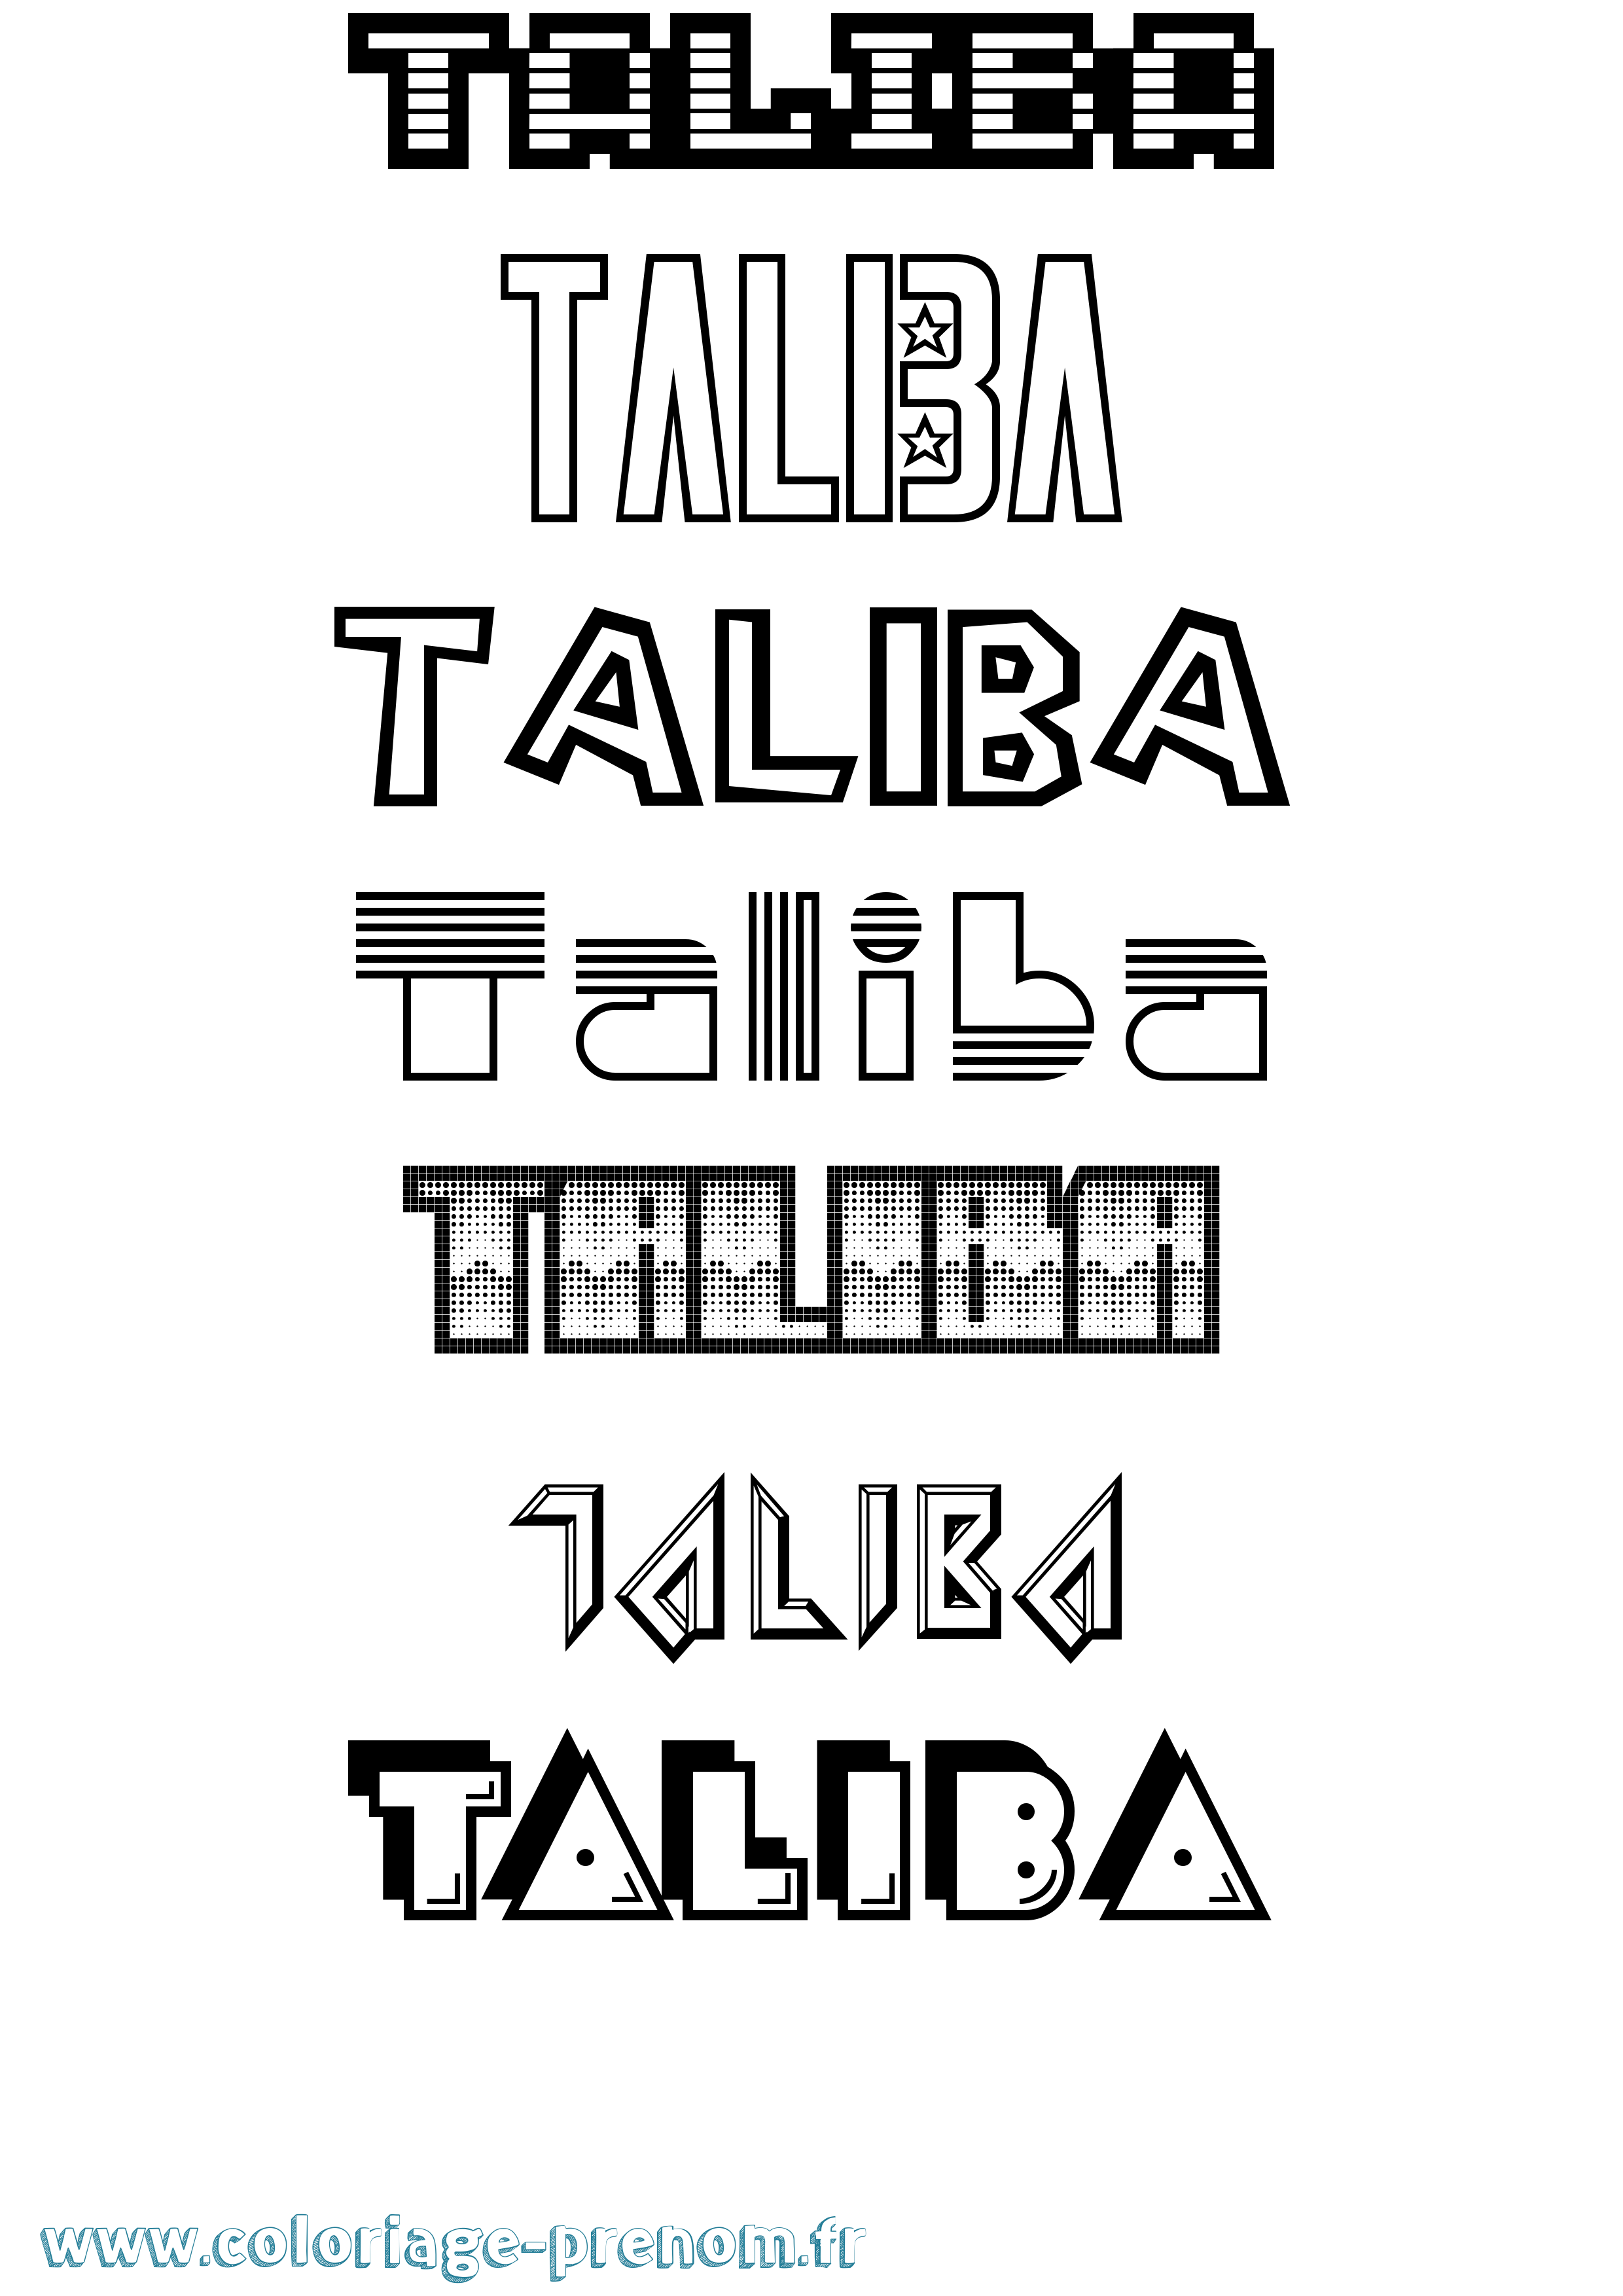 Coloriage prénom Taliba Jeux Vidéos